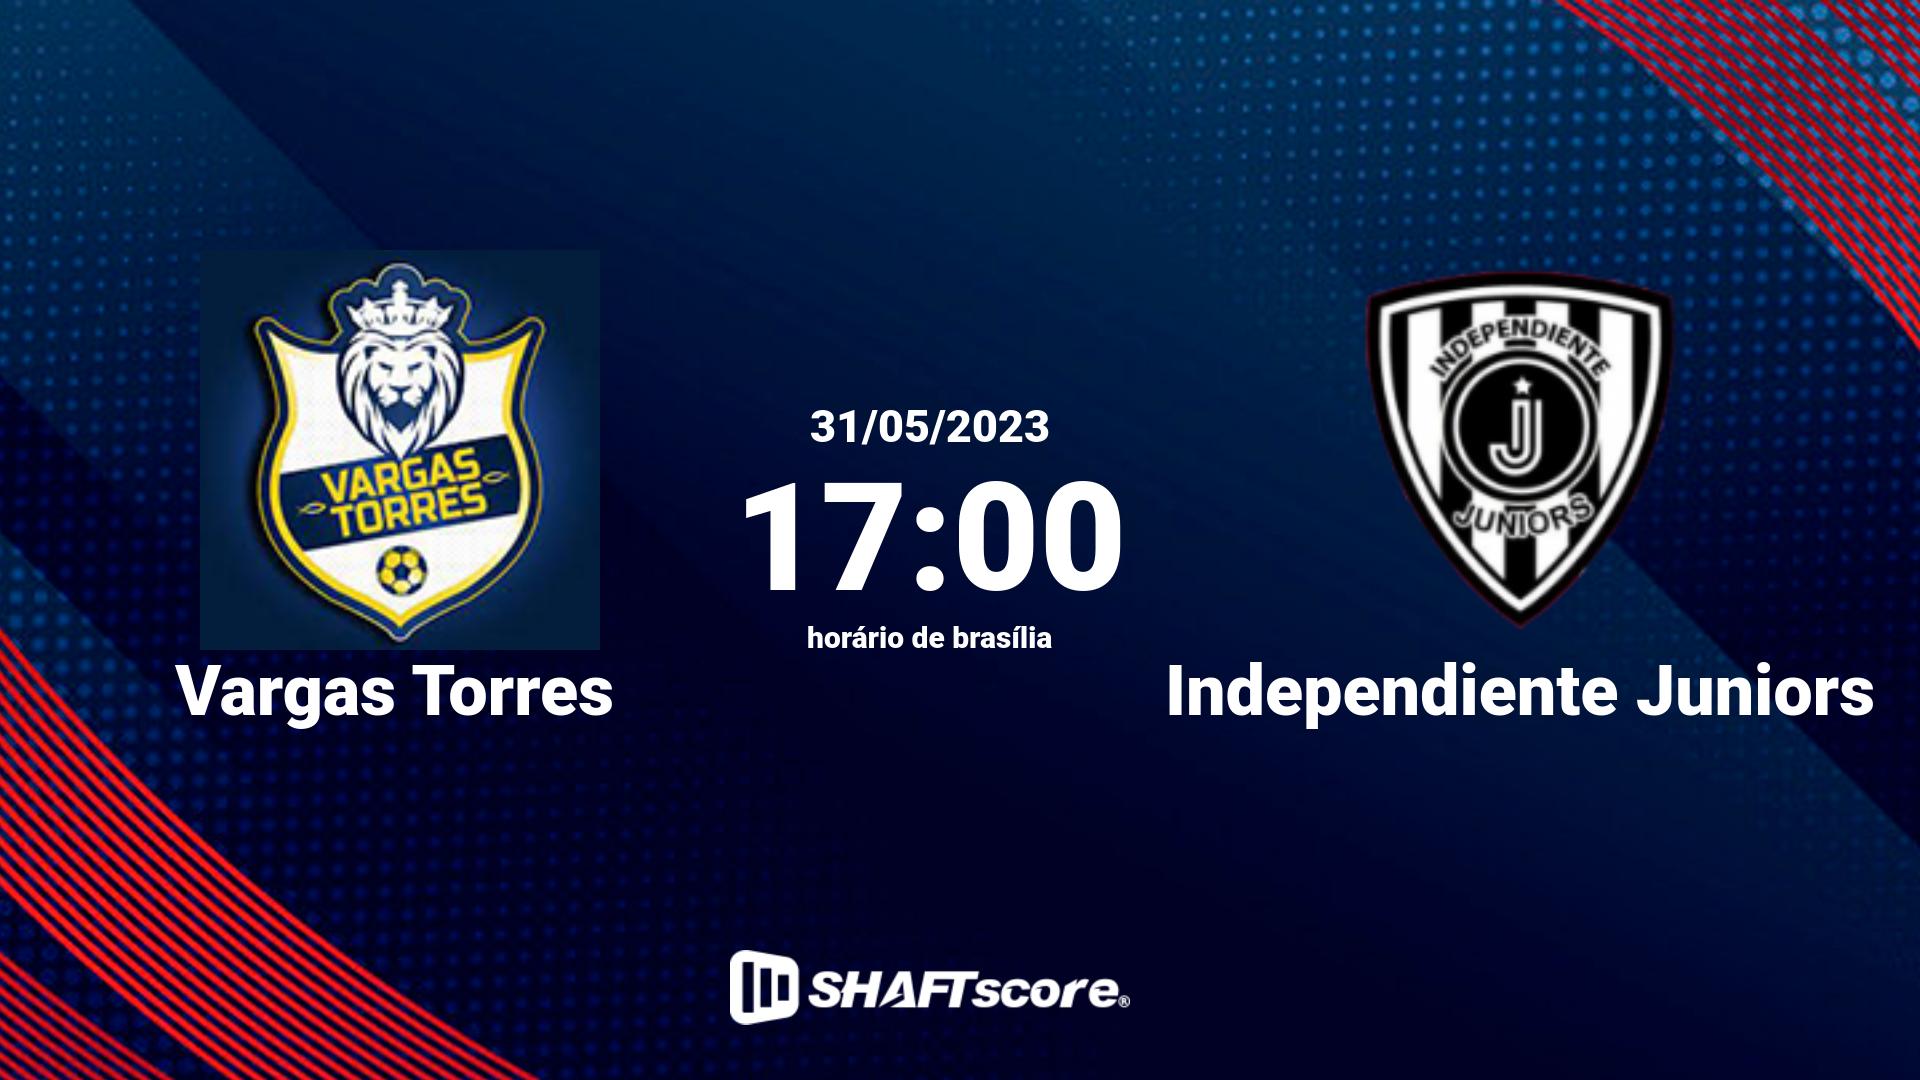 Estatísticas do jogo Vargas Torres vs Independiente Juniors 31.05 17:00